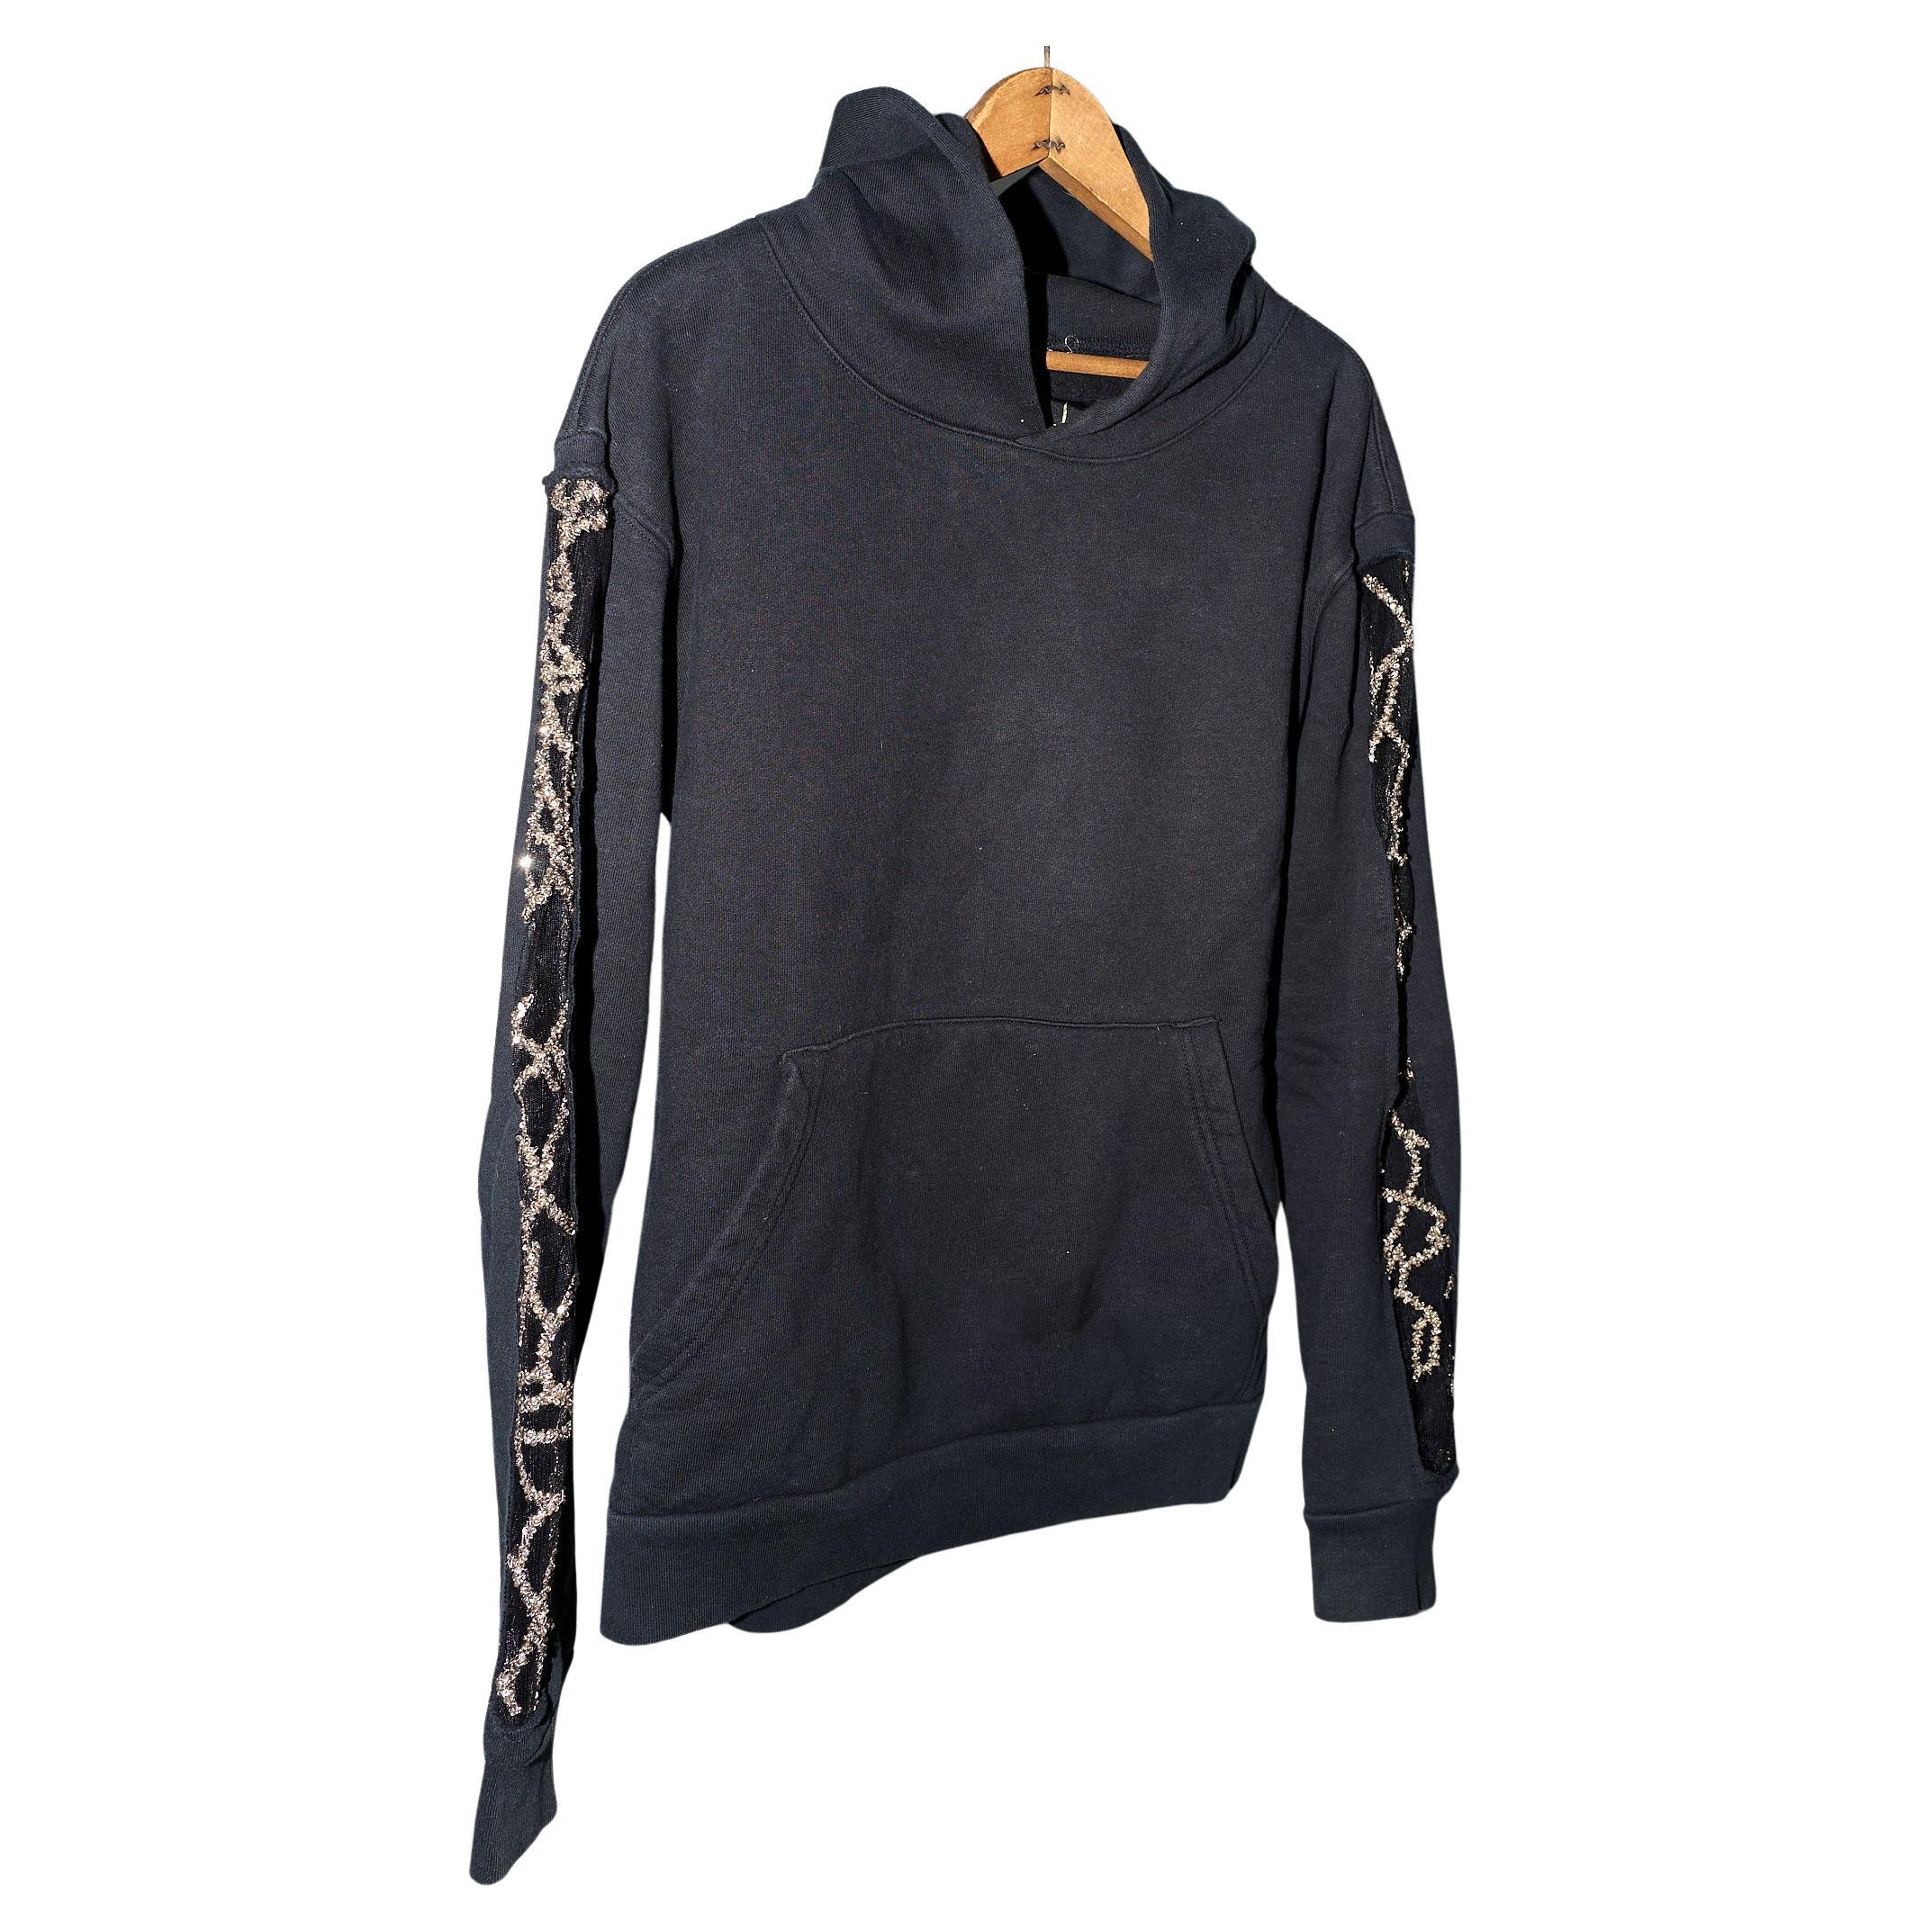 Black Hoodie Sweatshirt Transparent Sheer Mesh Chrystal Embroidery J Dauphin In New Condition For Sale In Los Angeles, CA